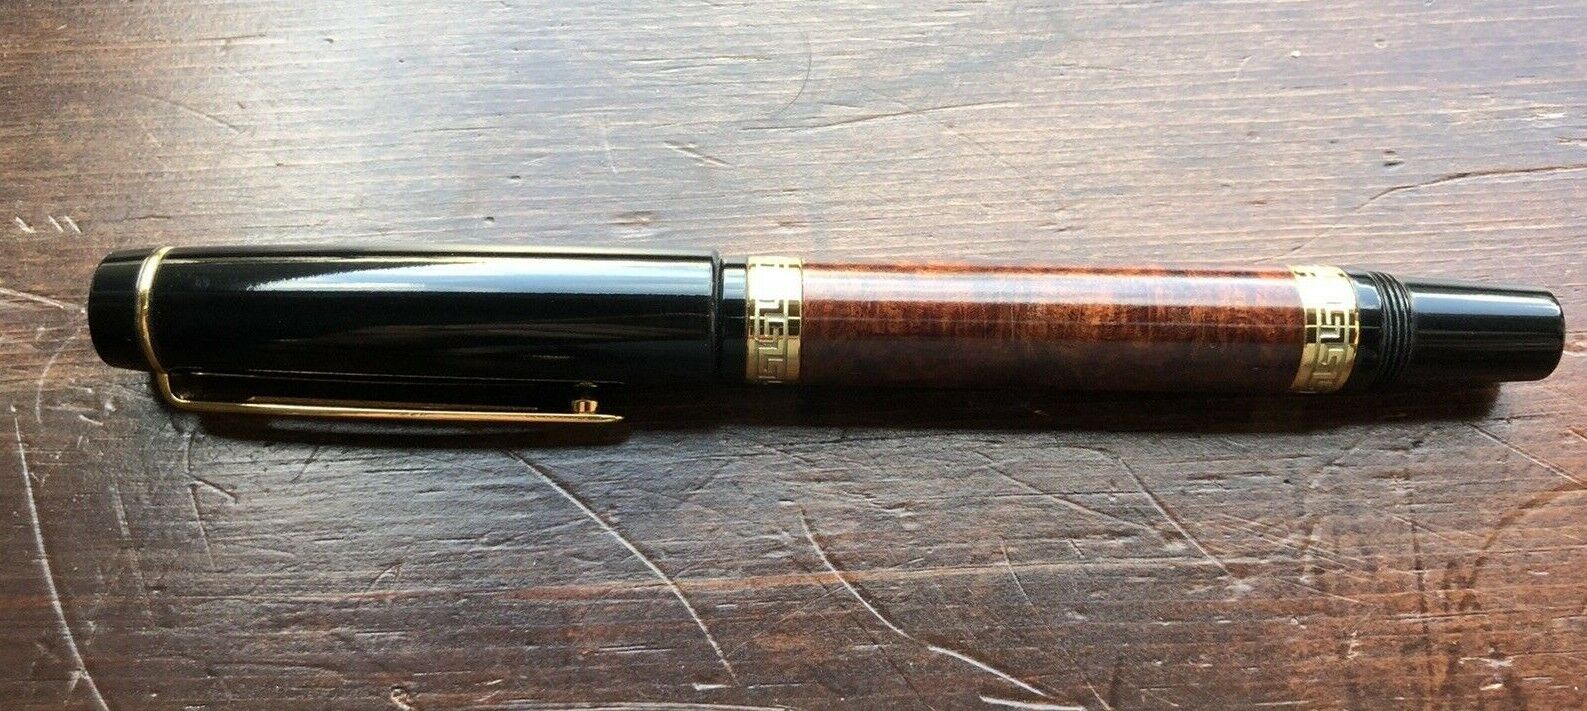 DANITRIO Wonderwood WB20 #116/200 Easy Feed Fountain Pen Iridium Tip Medium Nib